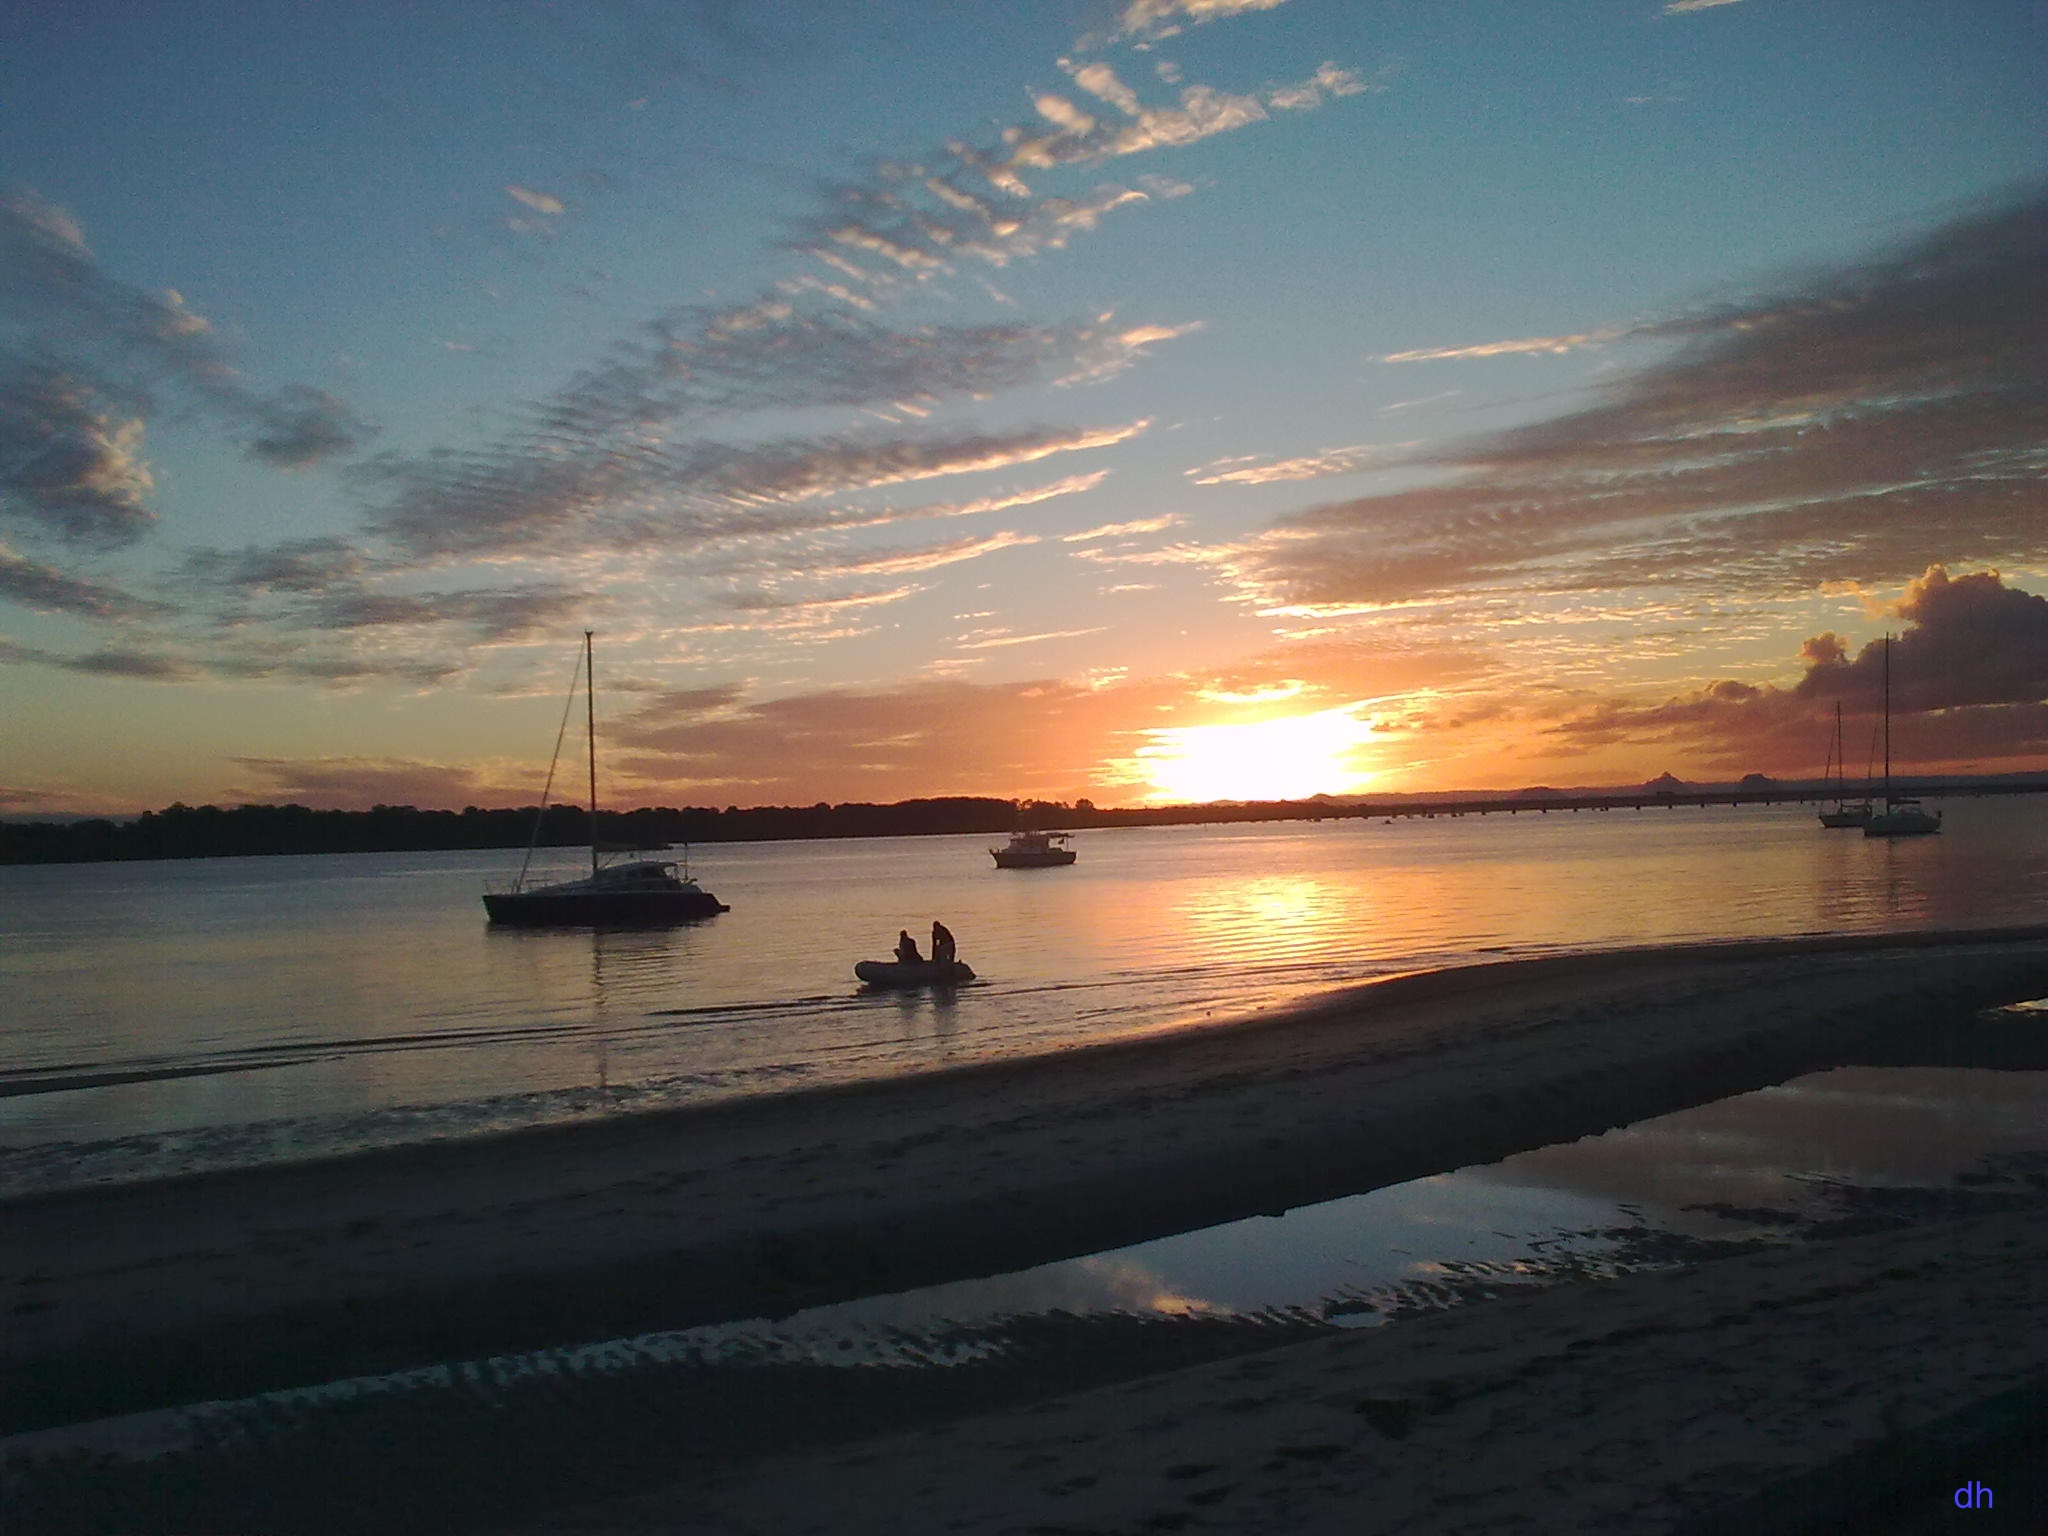 Sunset at Bribie Island, South East Queensland, Australia